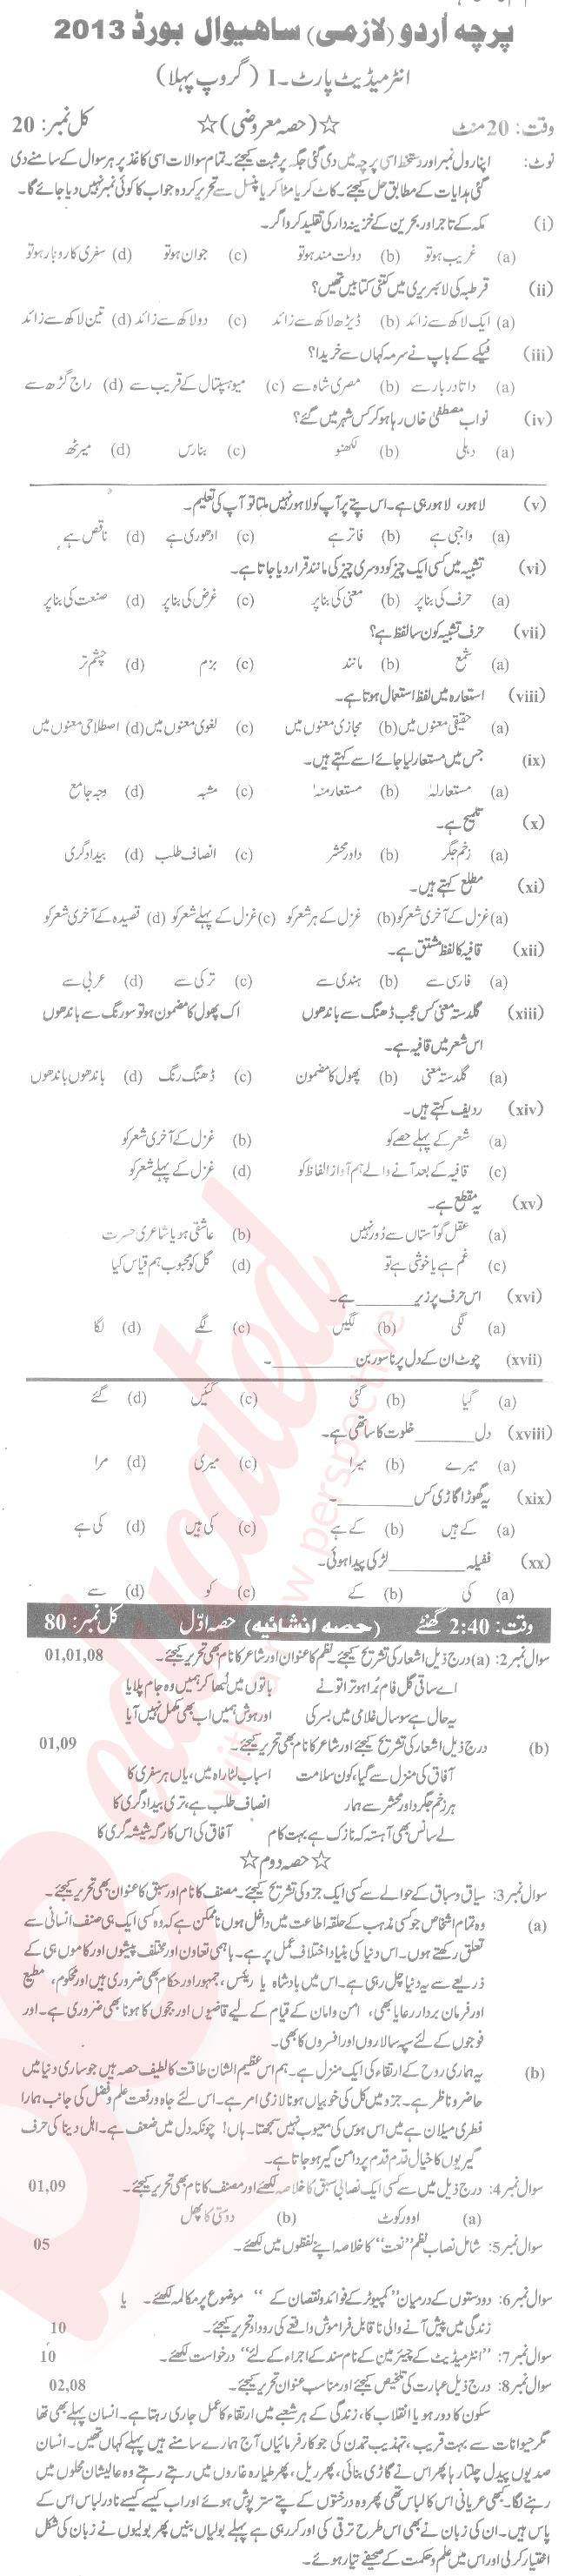 Urdu 11th class Past Paper Group 1 BISE Sahiwal 2013